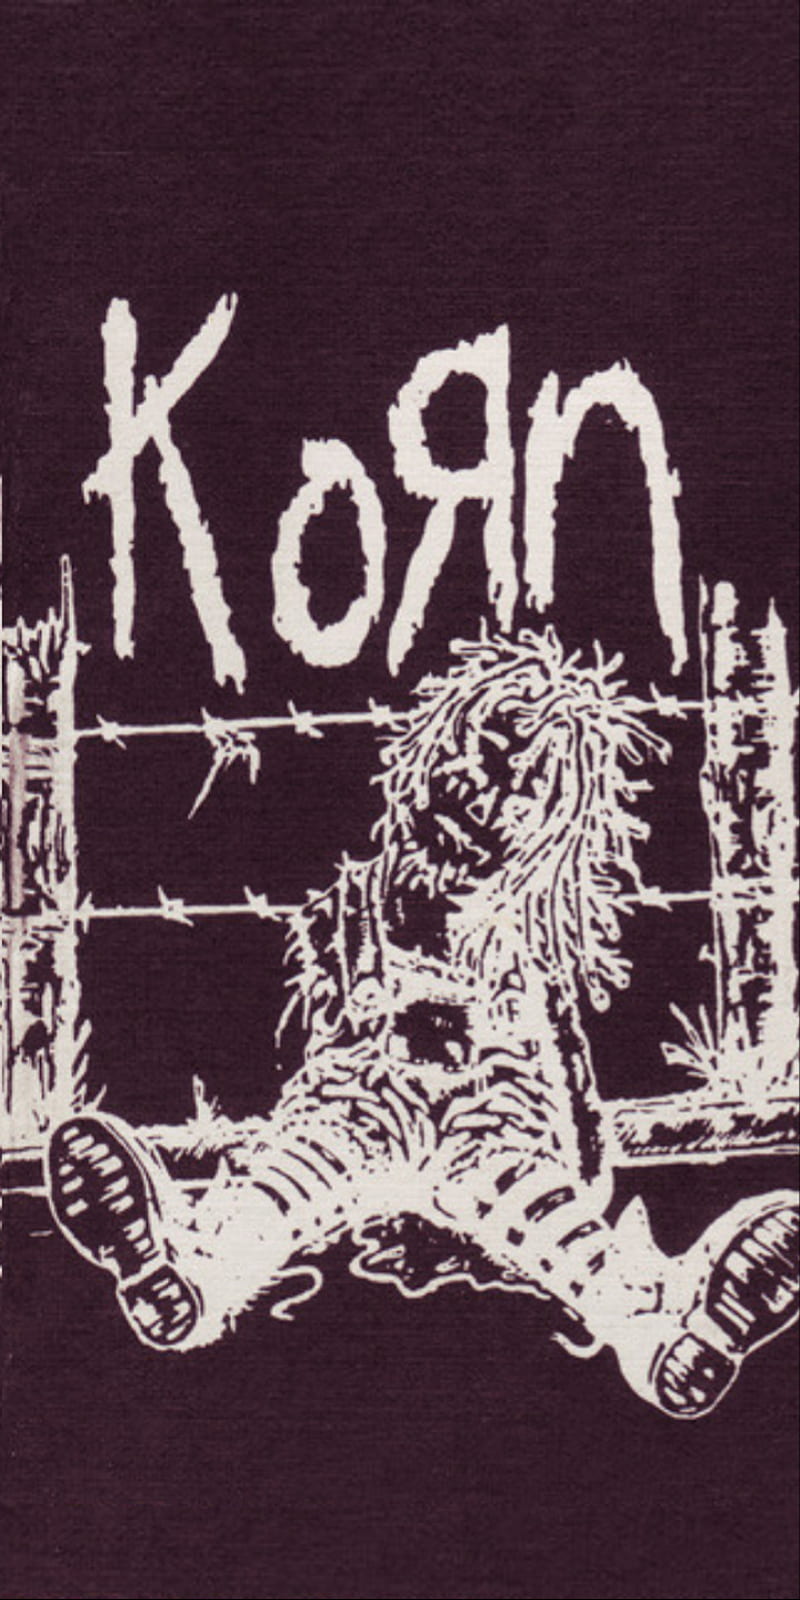 Amazoncom Korn Wallpaper Alternative Metal Band Poster Nu Metal Band  artwork Rock Band Art Musicians Print American Band Poster  לבית ולמטבח